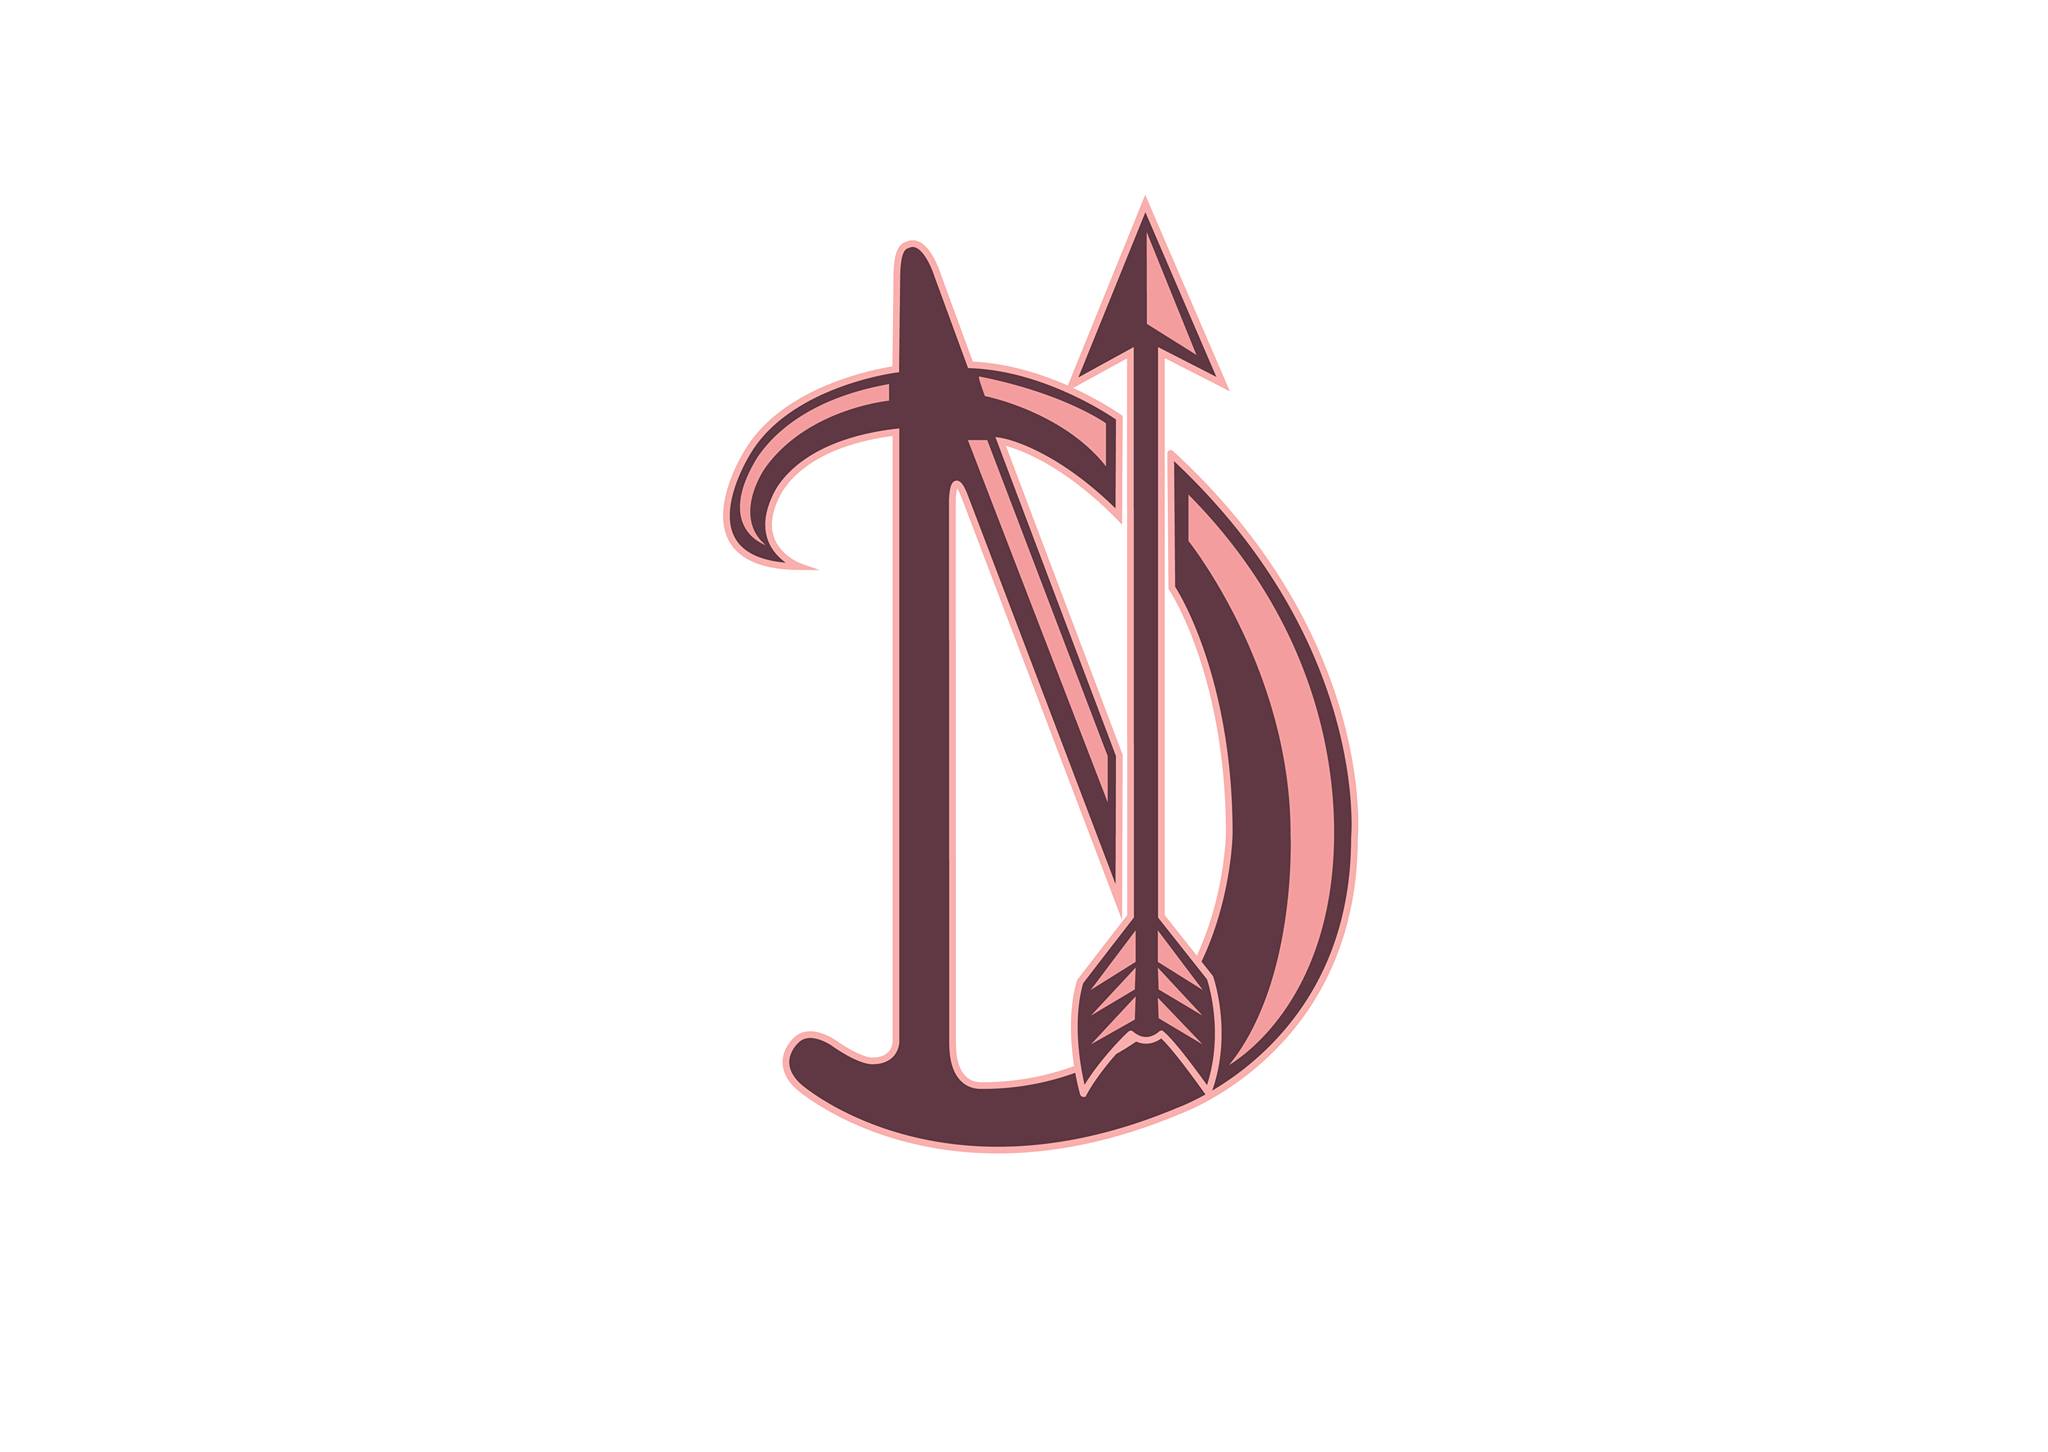 Du North Designs Ltd.